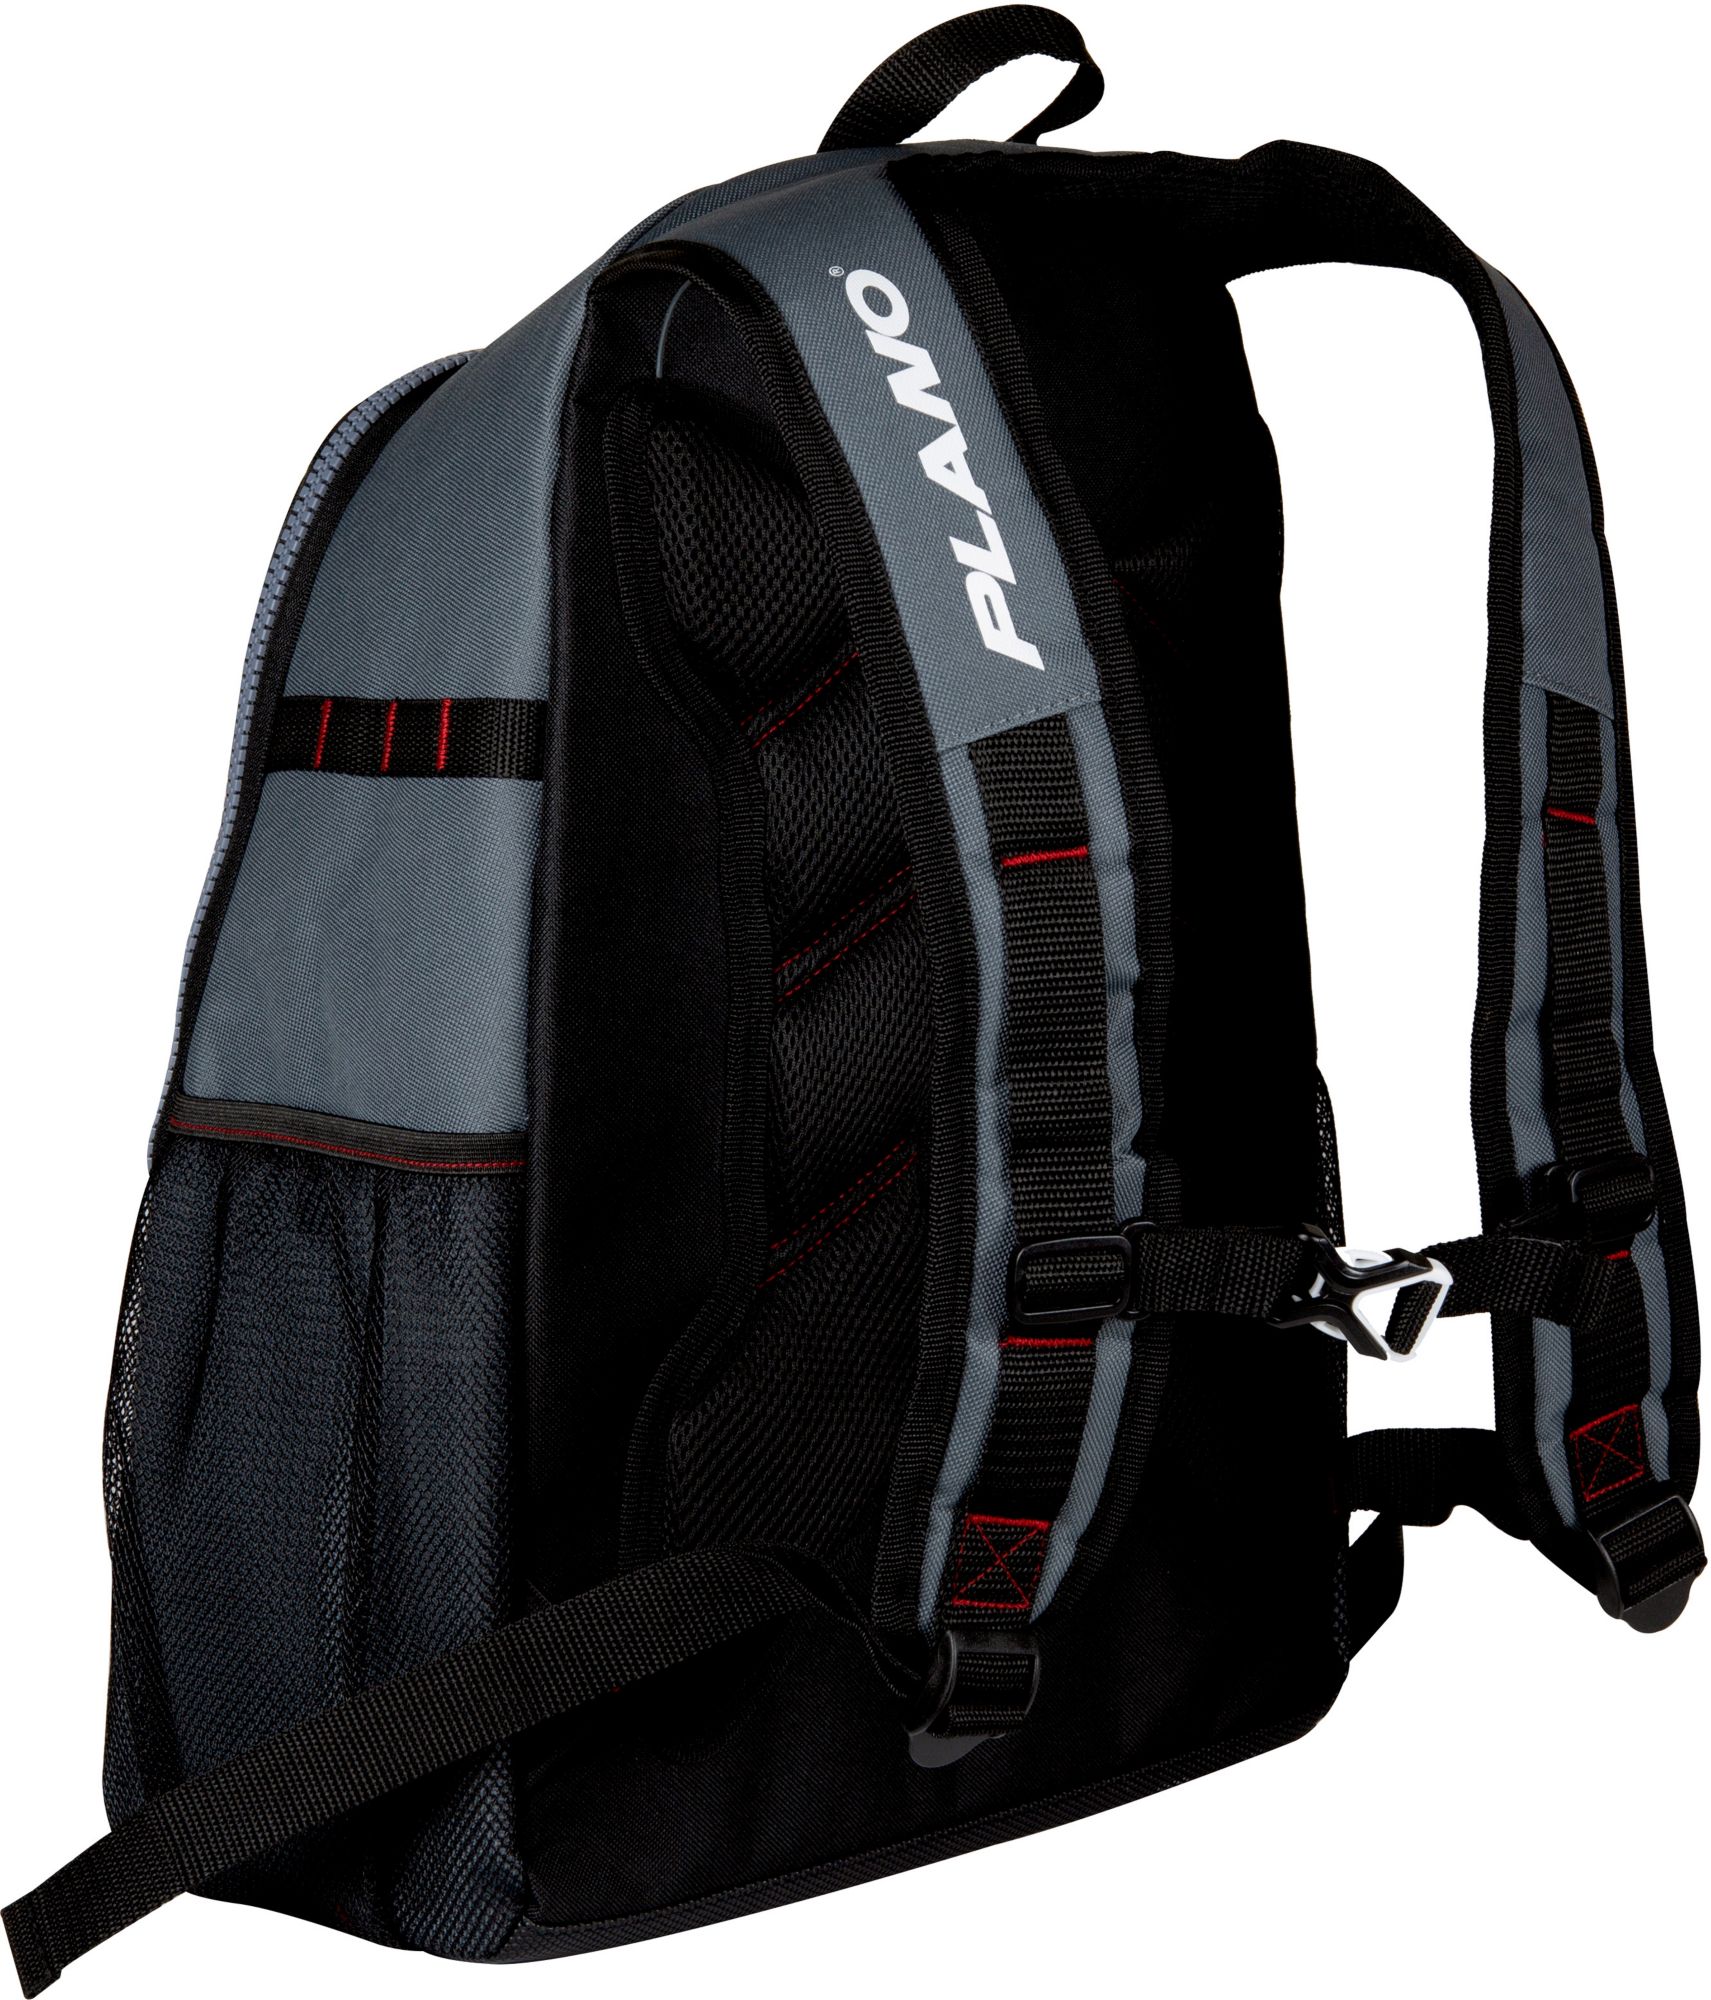 Dick's Sporting Goods Plano Weekend Series 3700 Backpack Tackle